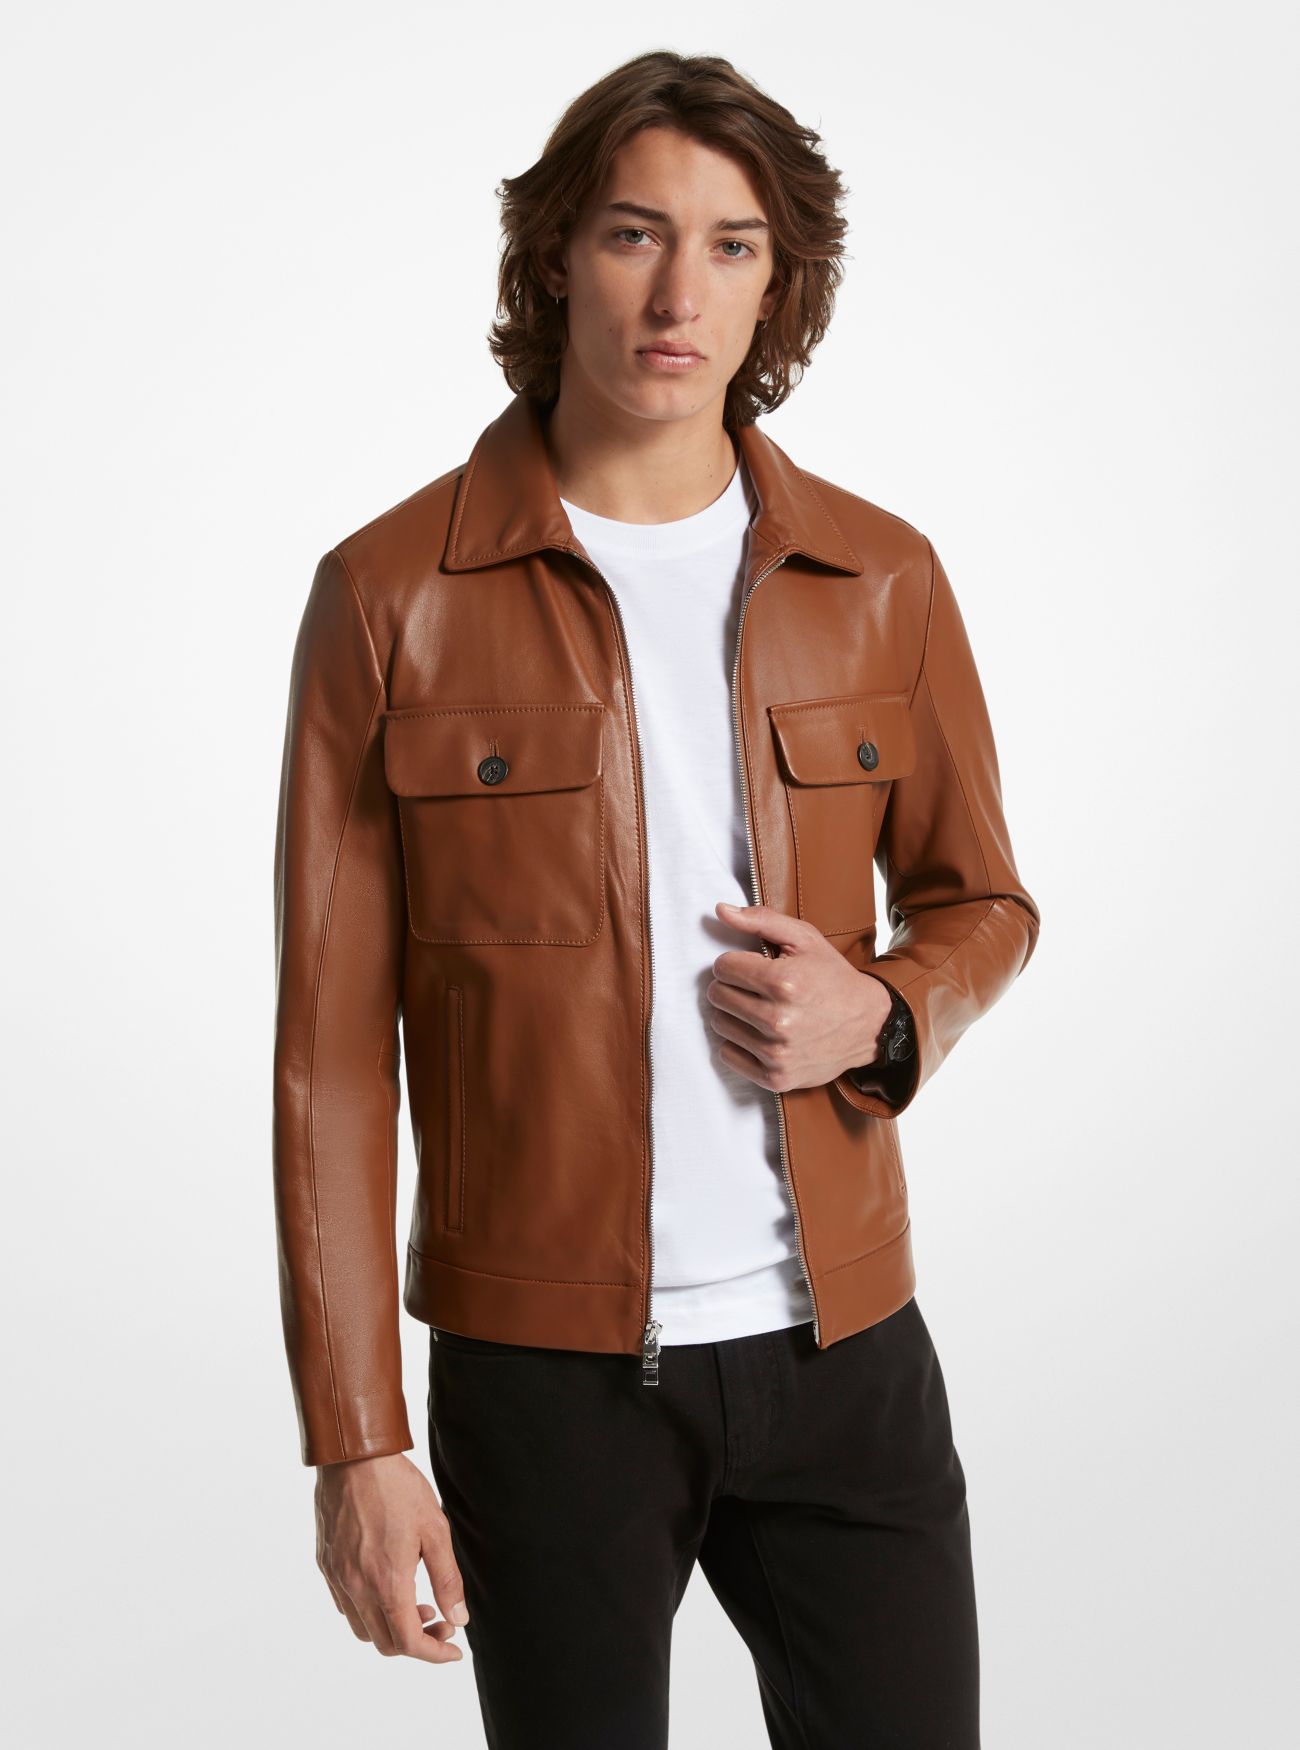 MK Bonded Leather Jacket - Luggage Brown - Michael Kors